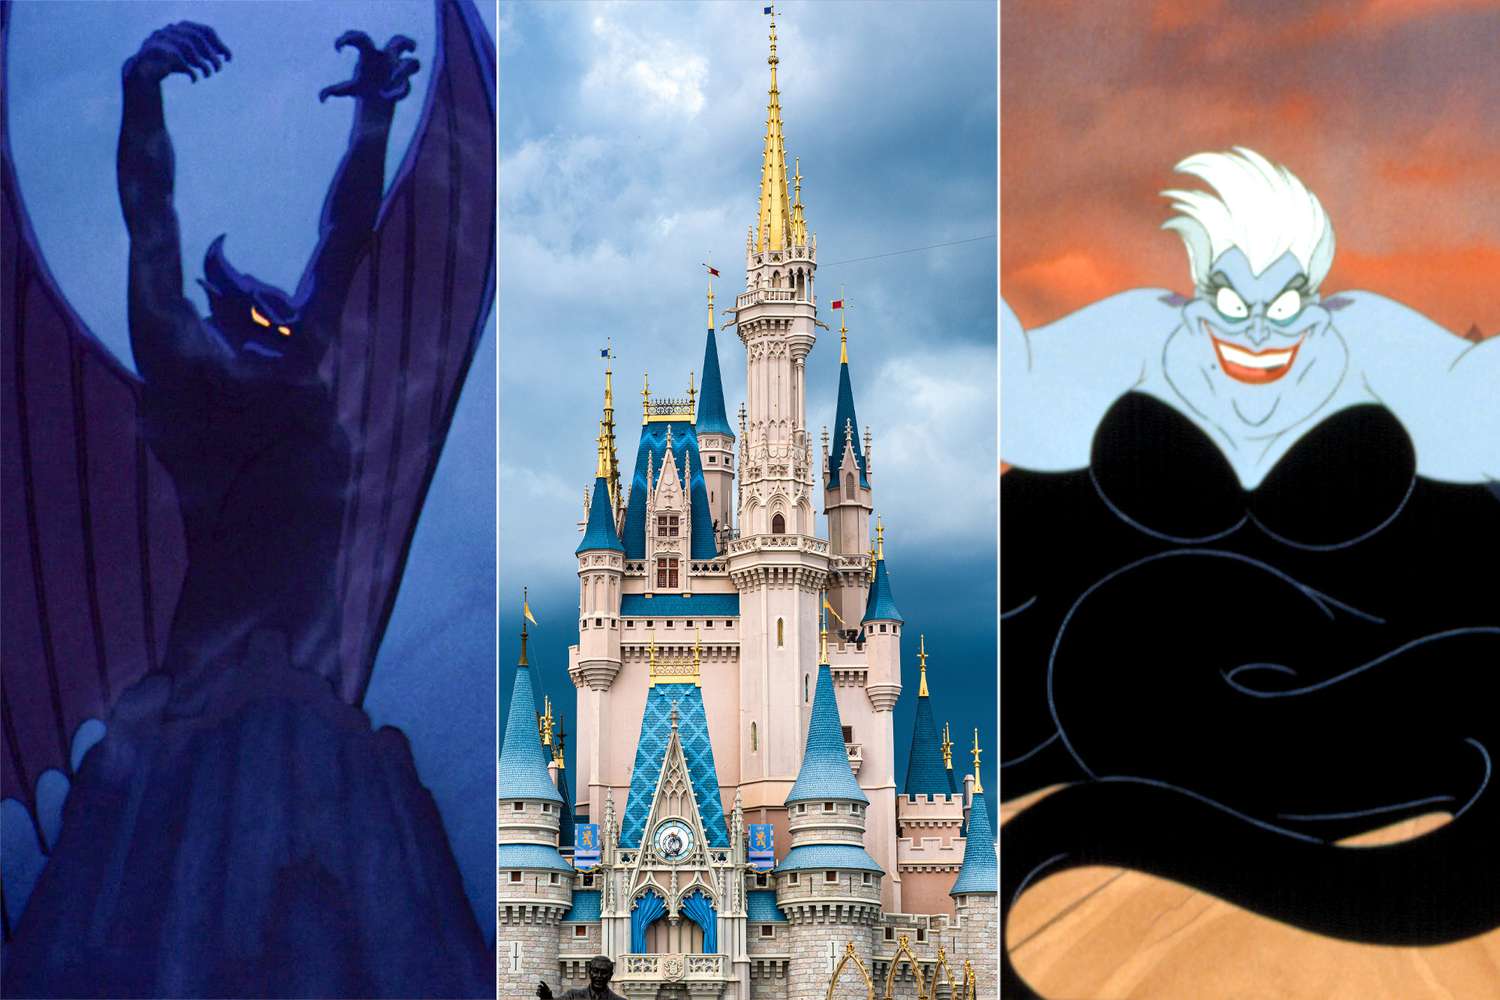 Chernabog in 'Fantasia'; Cinderella's castle at Disney World; Ursula in 'The Little Mermaid'